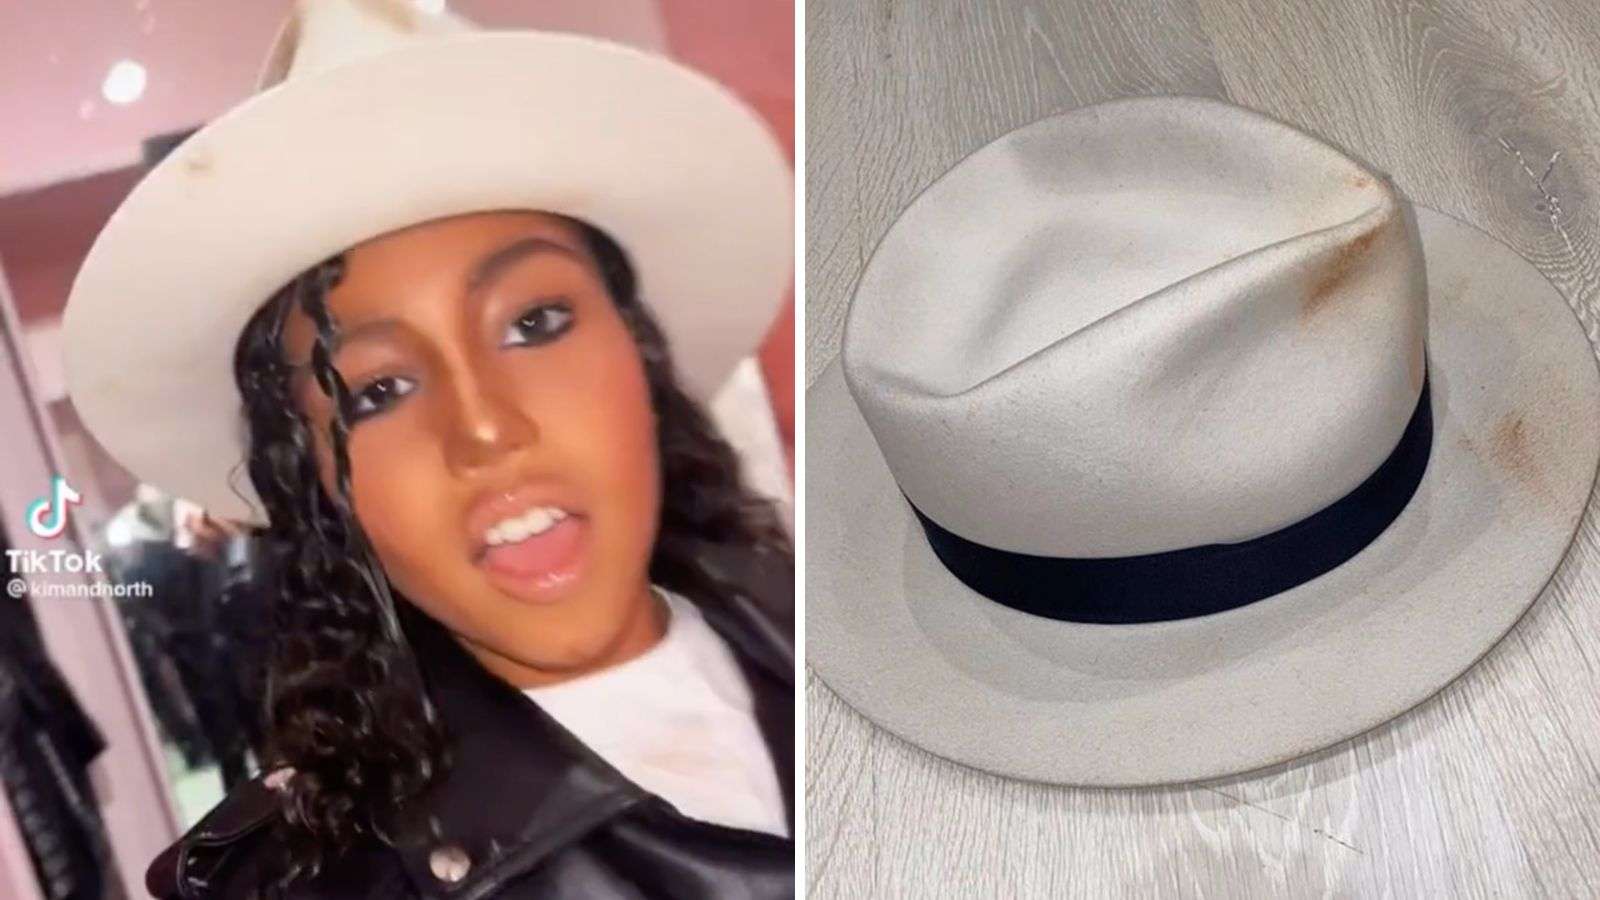 North West wearing Michael Jackson's hat for TikTok video